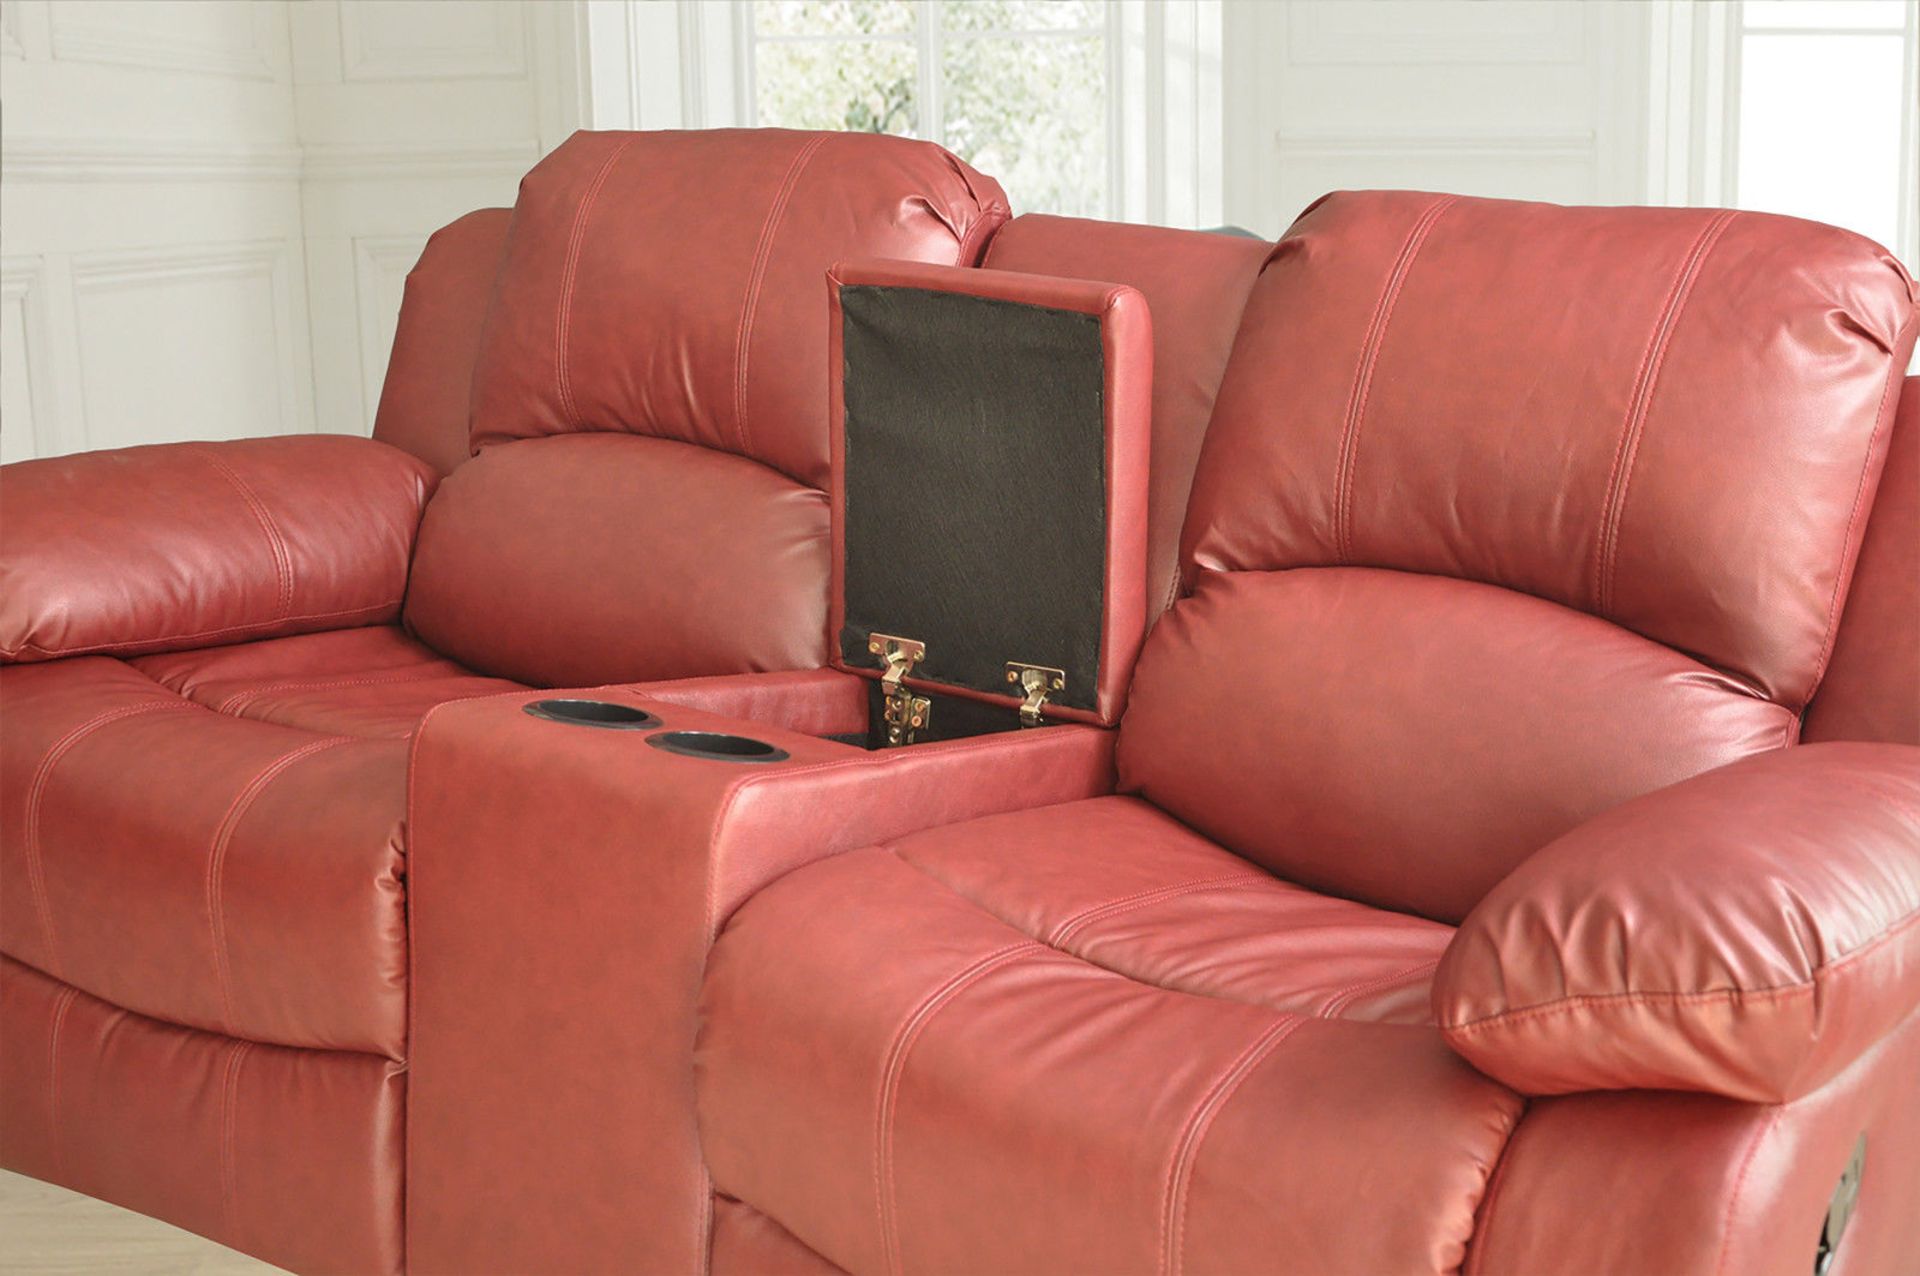 Supreme Valance burgandy leather 3 seater reclining sofa - Image 2 of 3